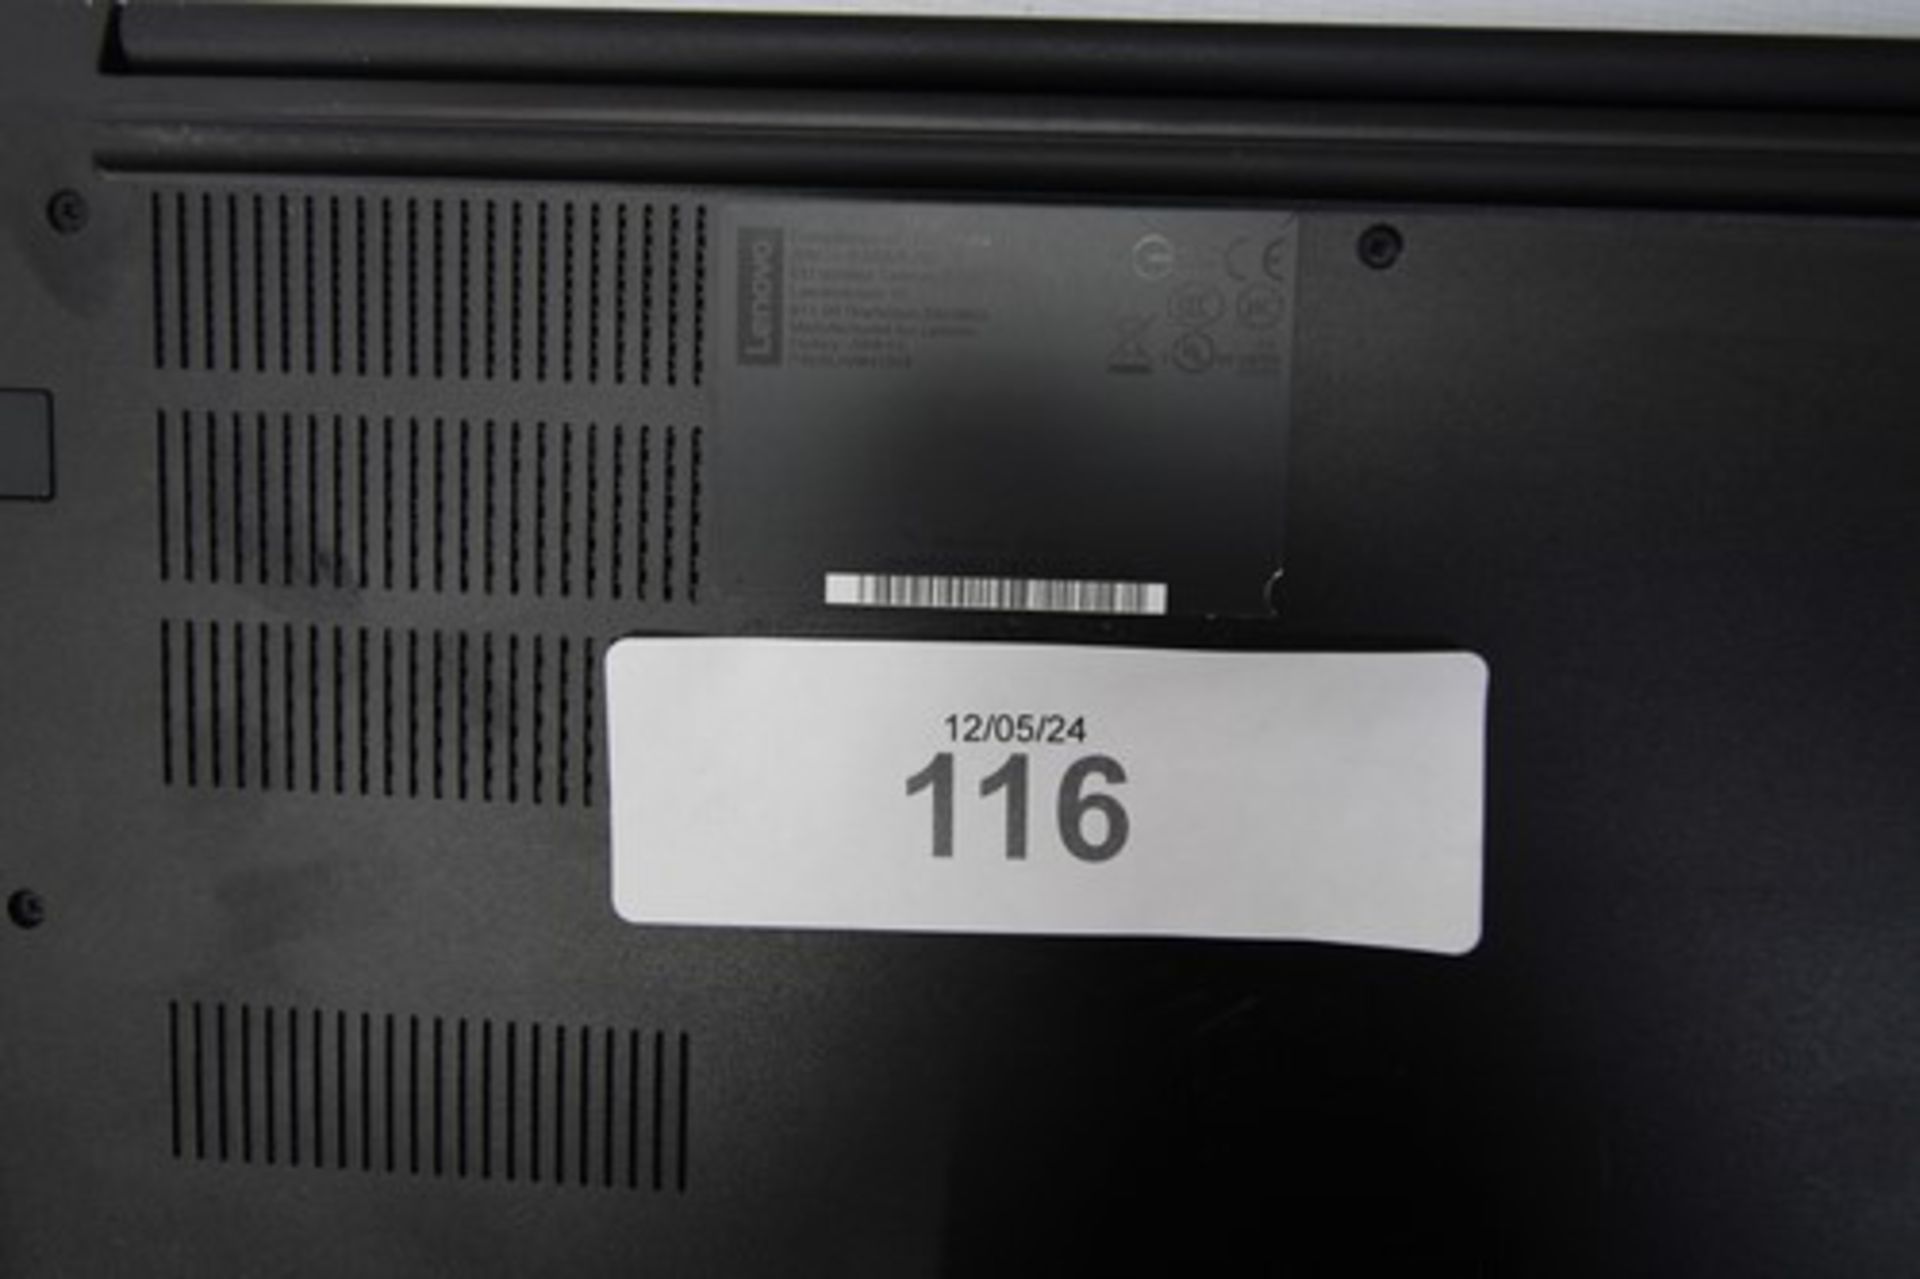 1 x Lenovo E14 Chrome Book laptop, model No: 7118670, powers on ok, unknown spec., factory reset - - Image 2 of 4